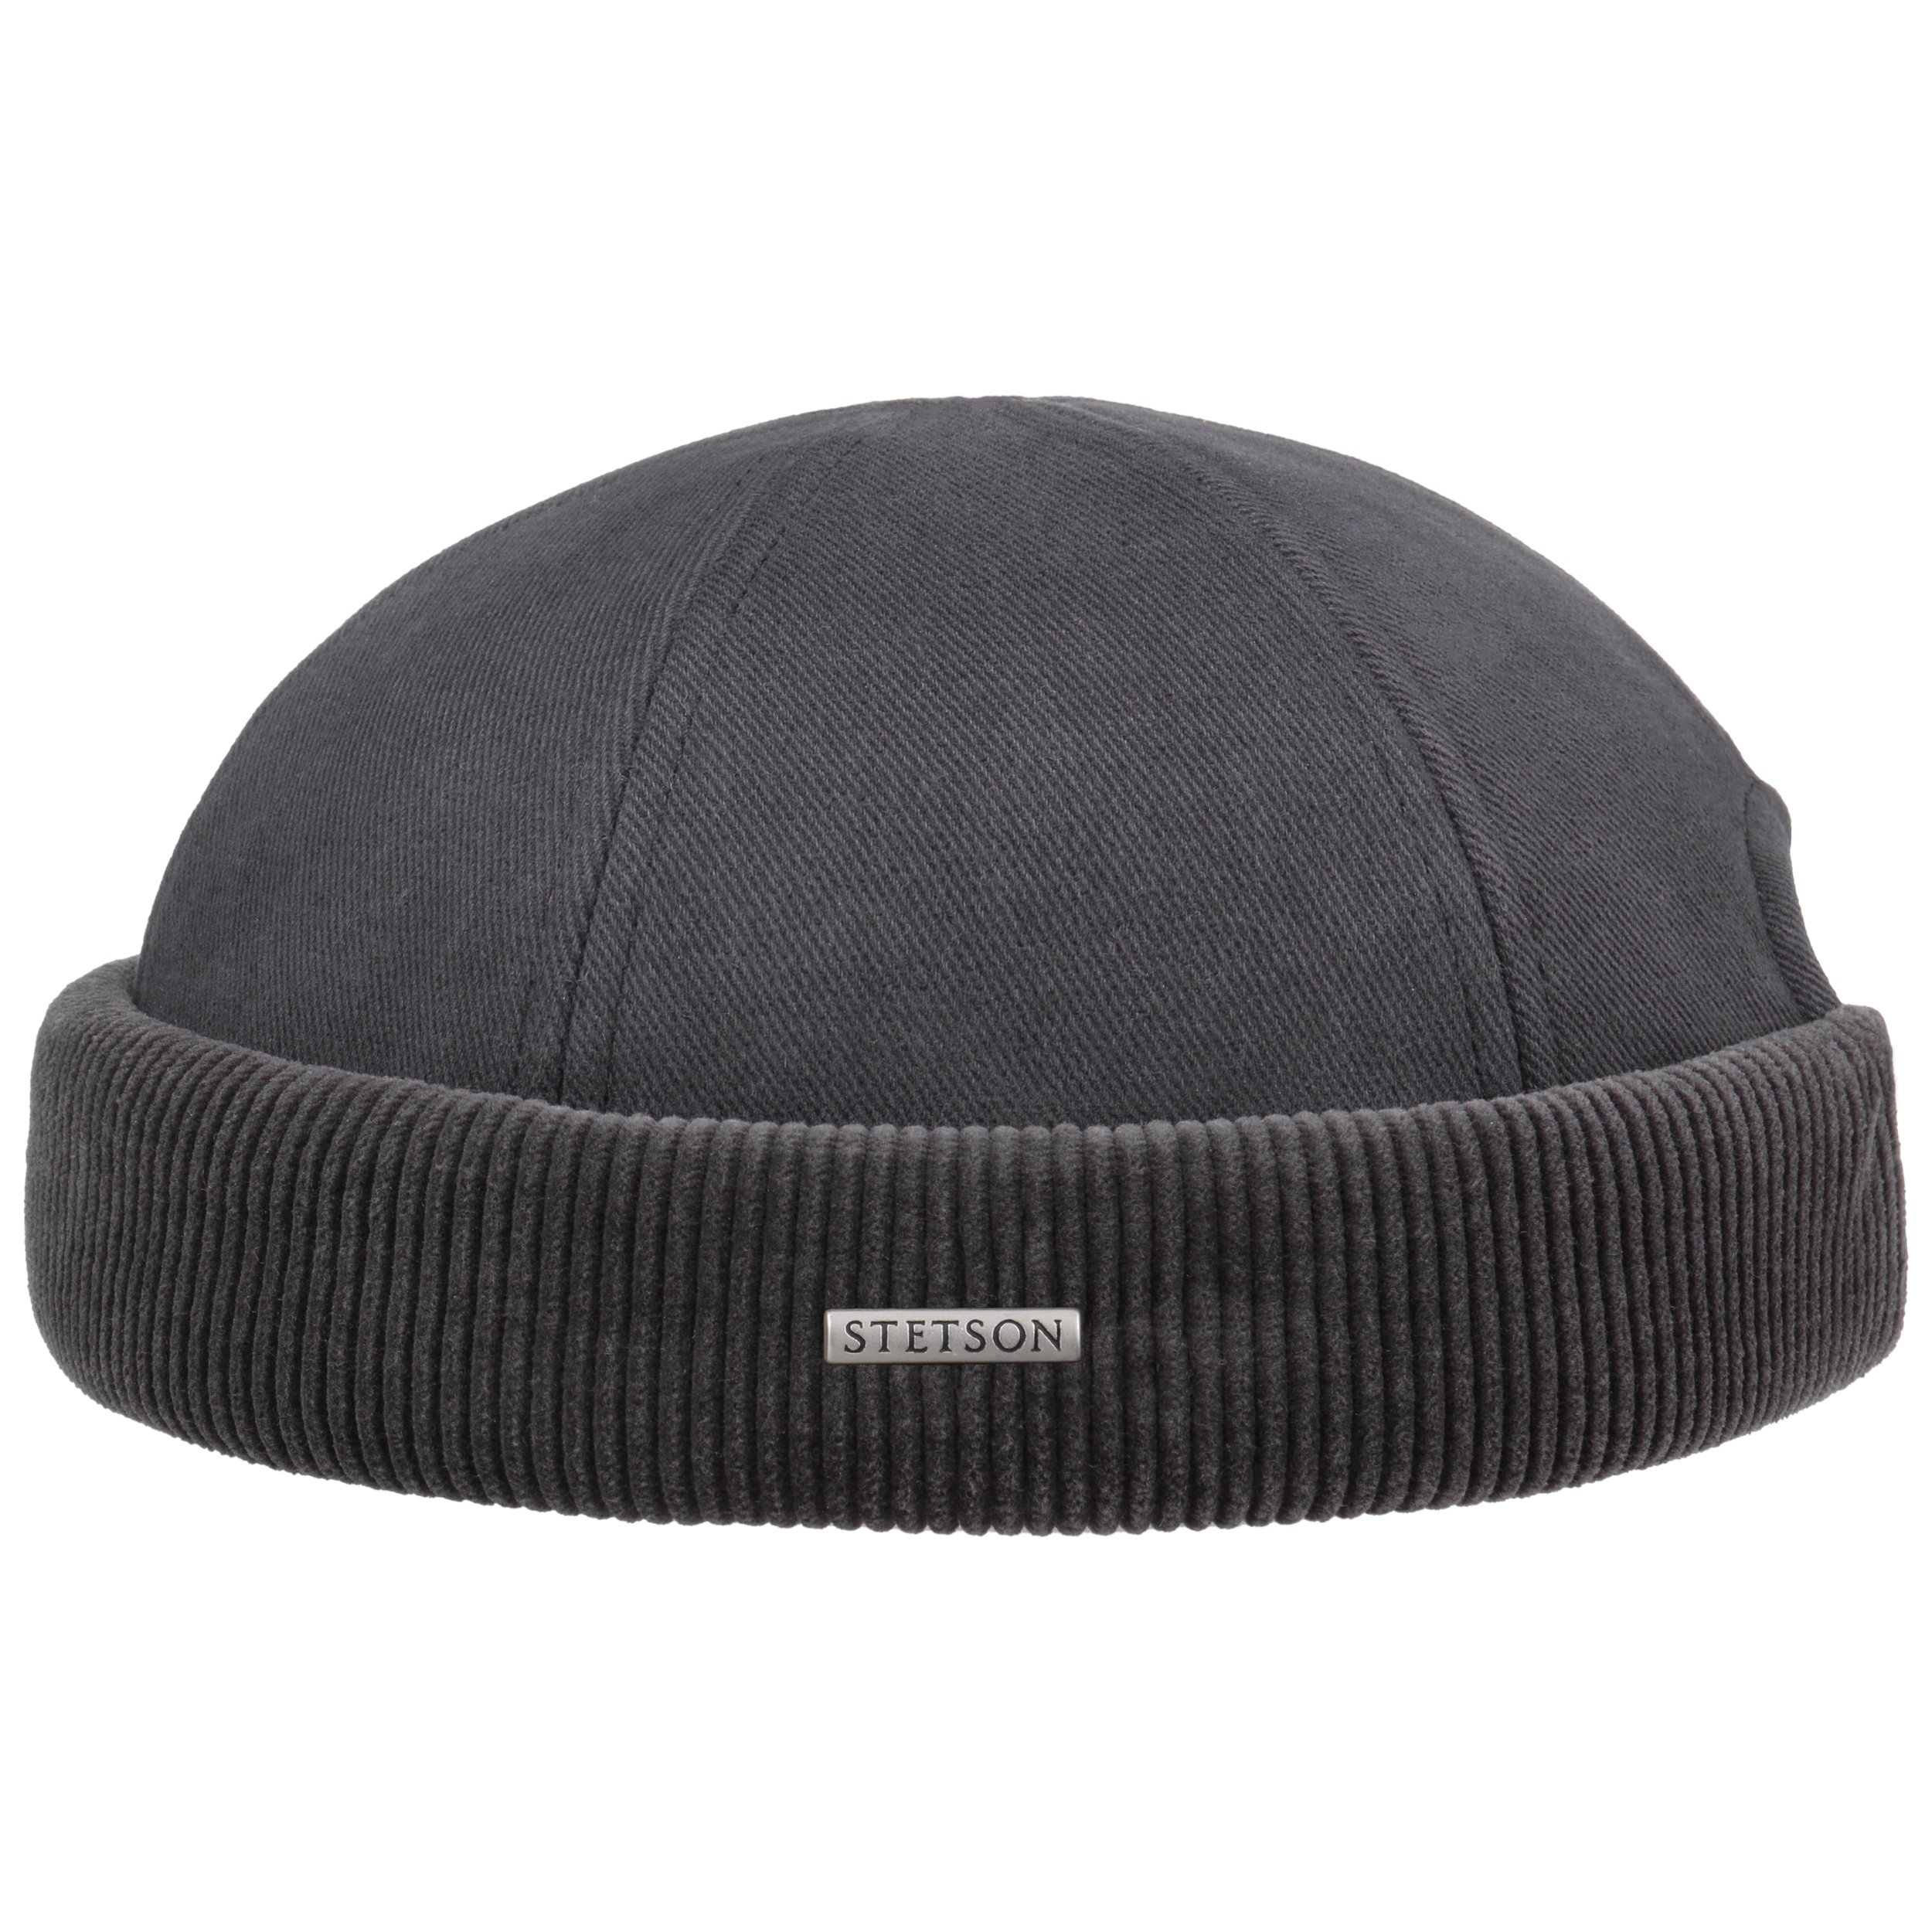 Kensington Soft Cotton Docker Hat by Stetson - 69,00 €